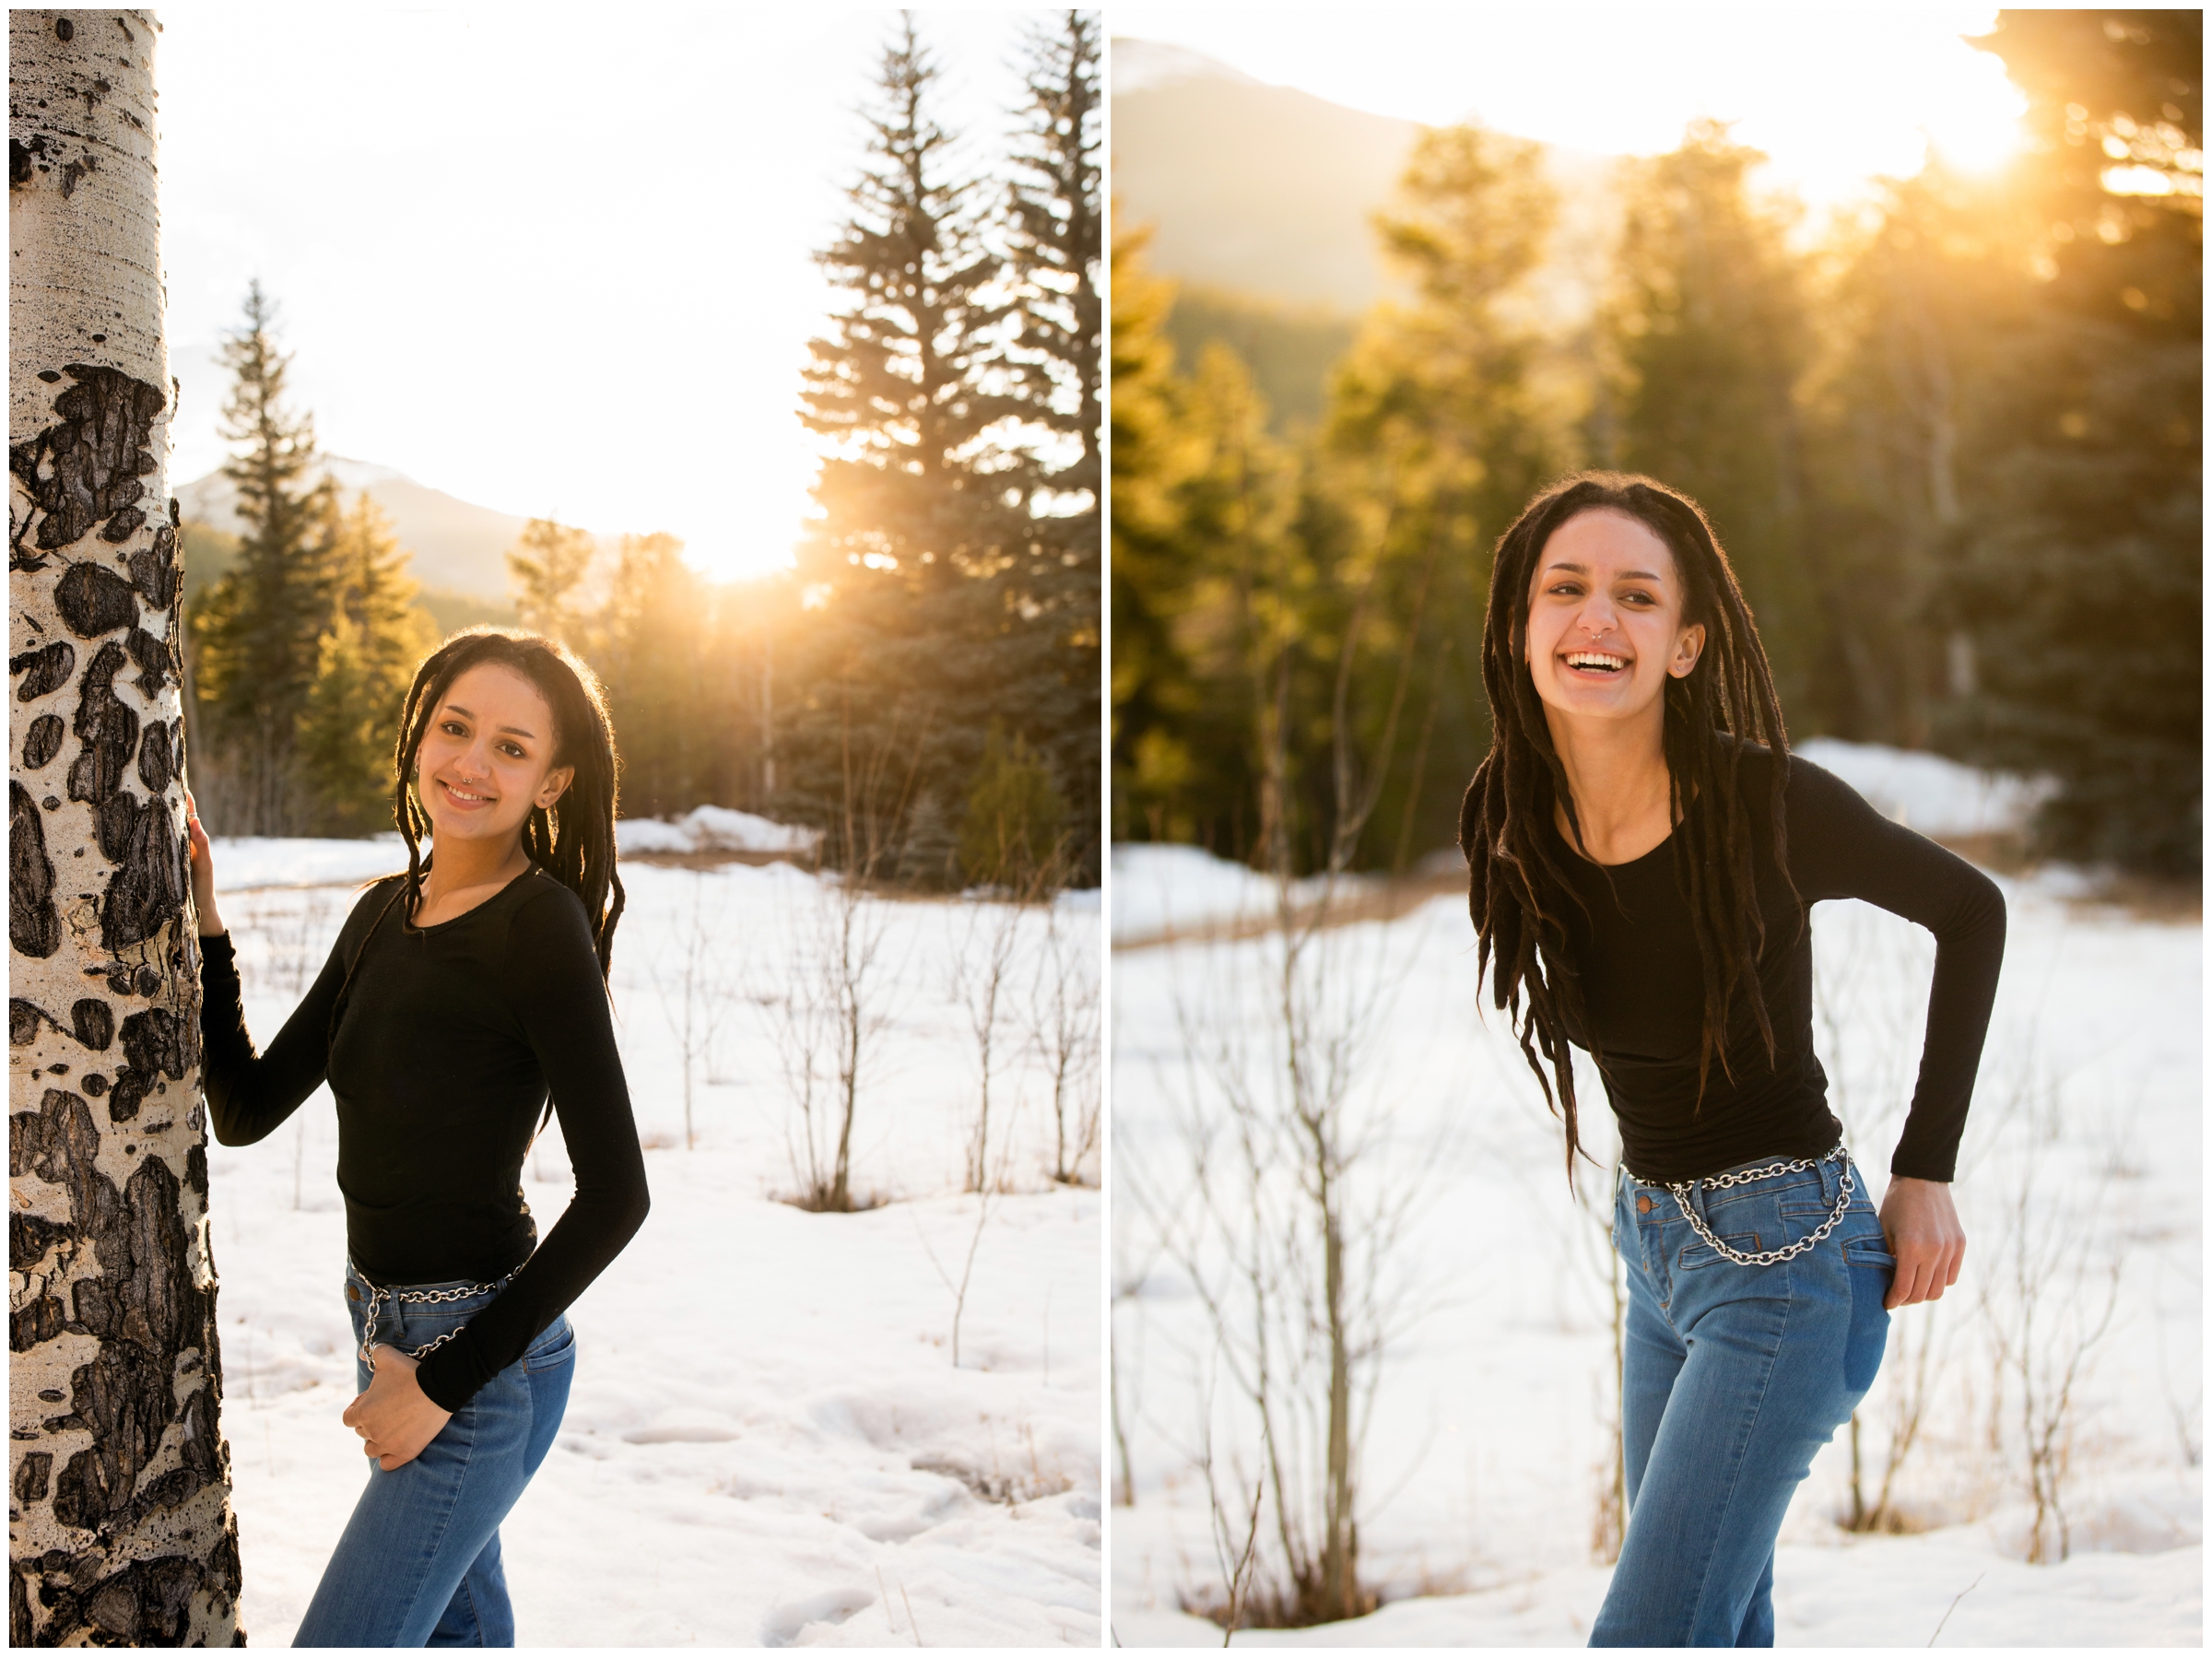 Snowy senior photography inspiration at Frosberg park in evergreen Colorado 